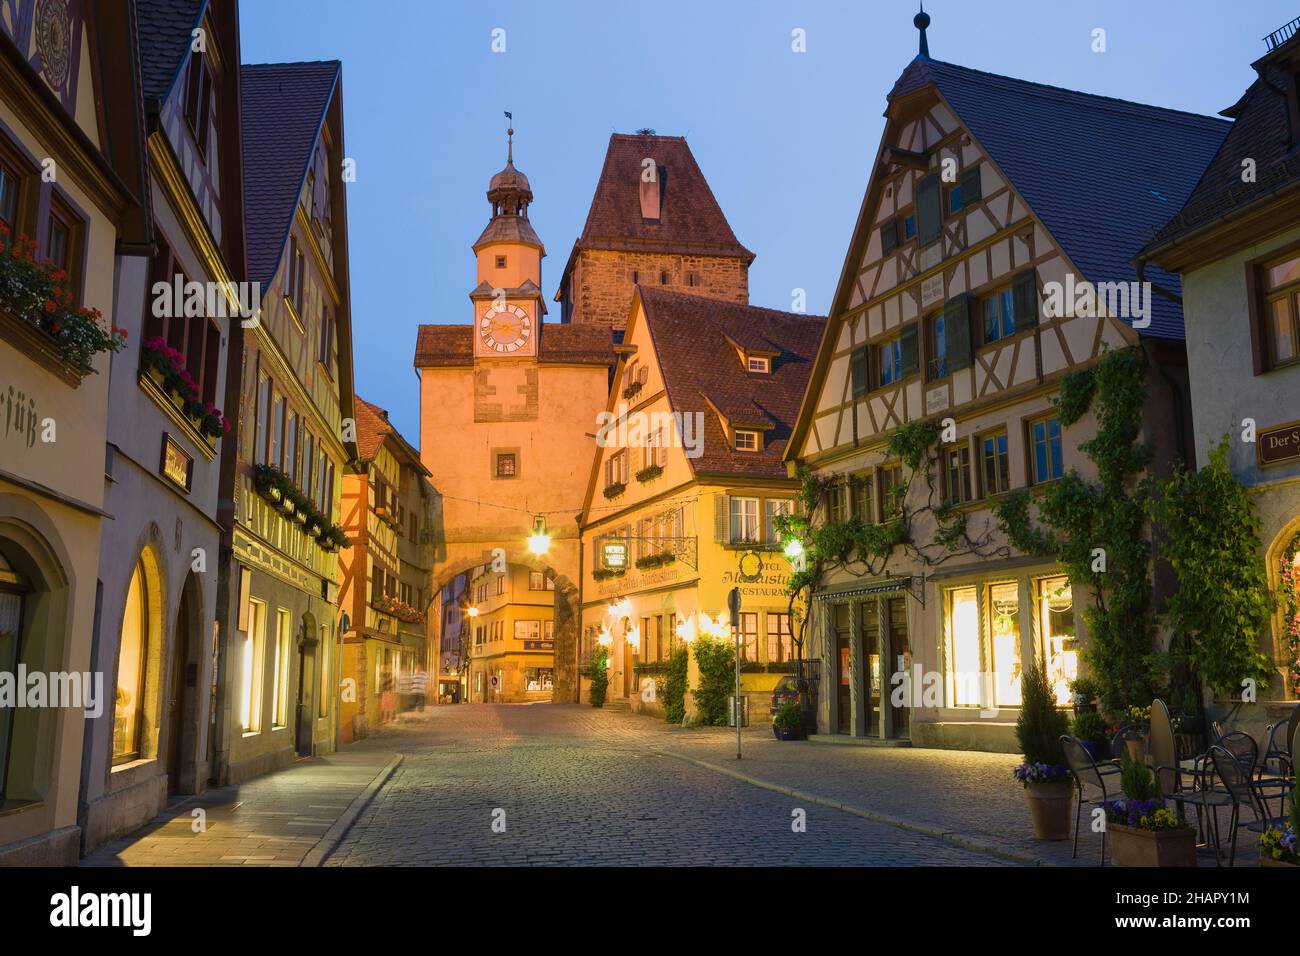 Calle medieval que conduce a Markusturm, Rothenburg ob der Tauber, Franconia, Baviera, Alemania Foto de stock